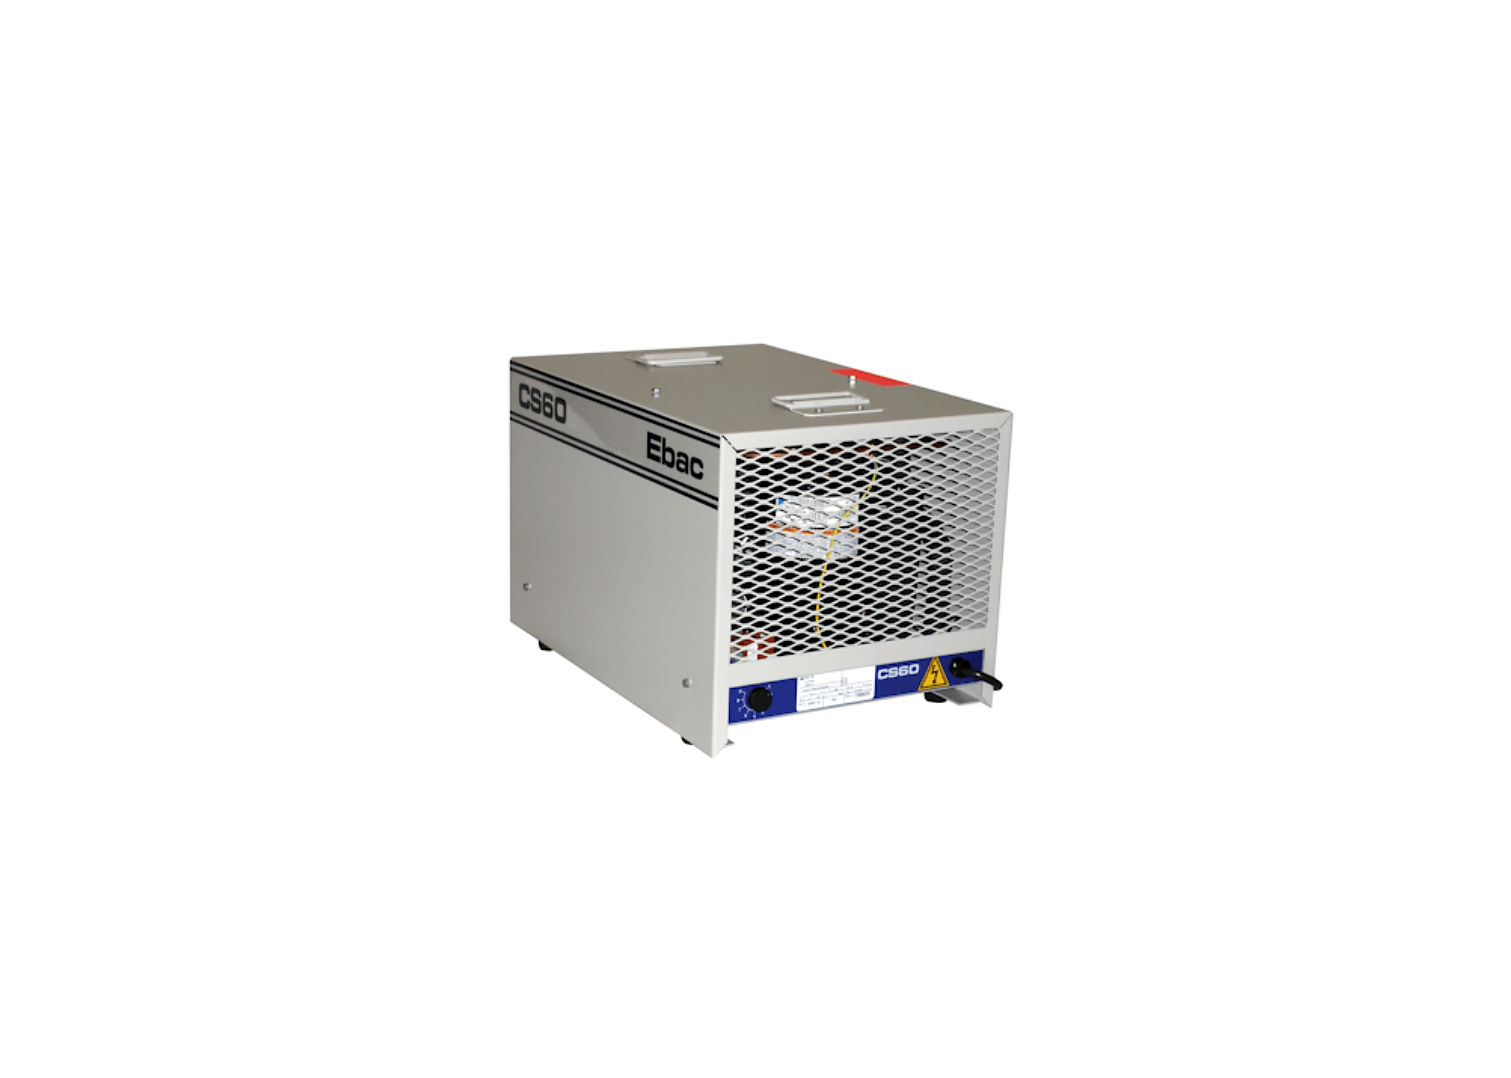 Ebac CS60 Commercial/Industrial Dehumidifier Covers 1500 Sq. Ft.